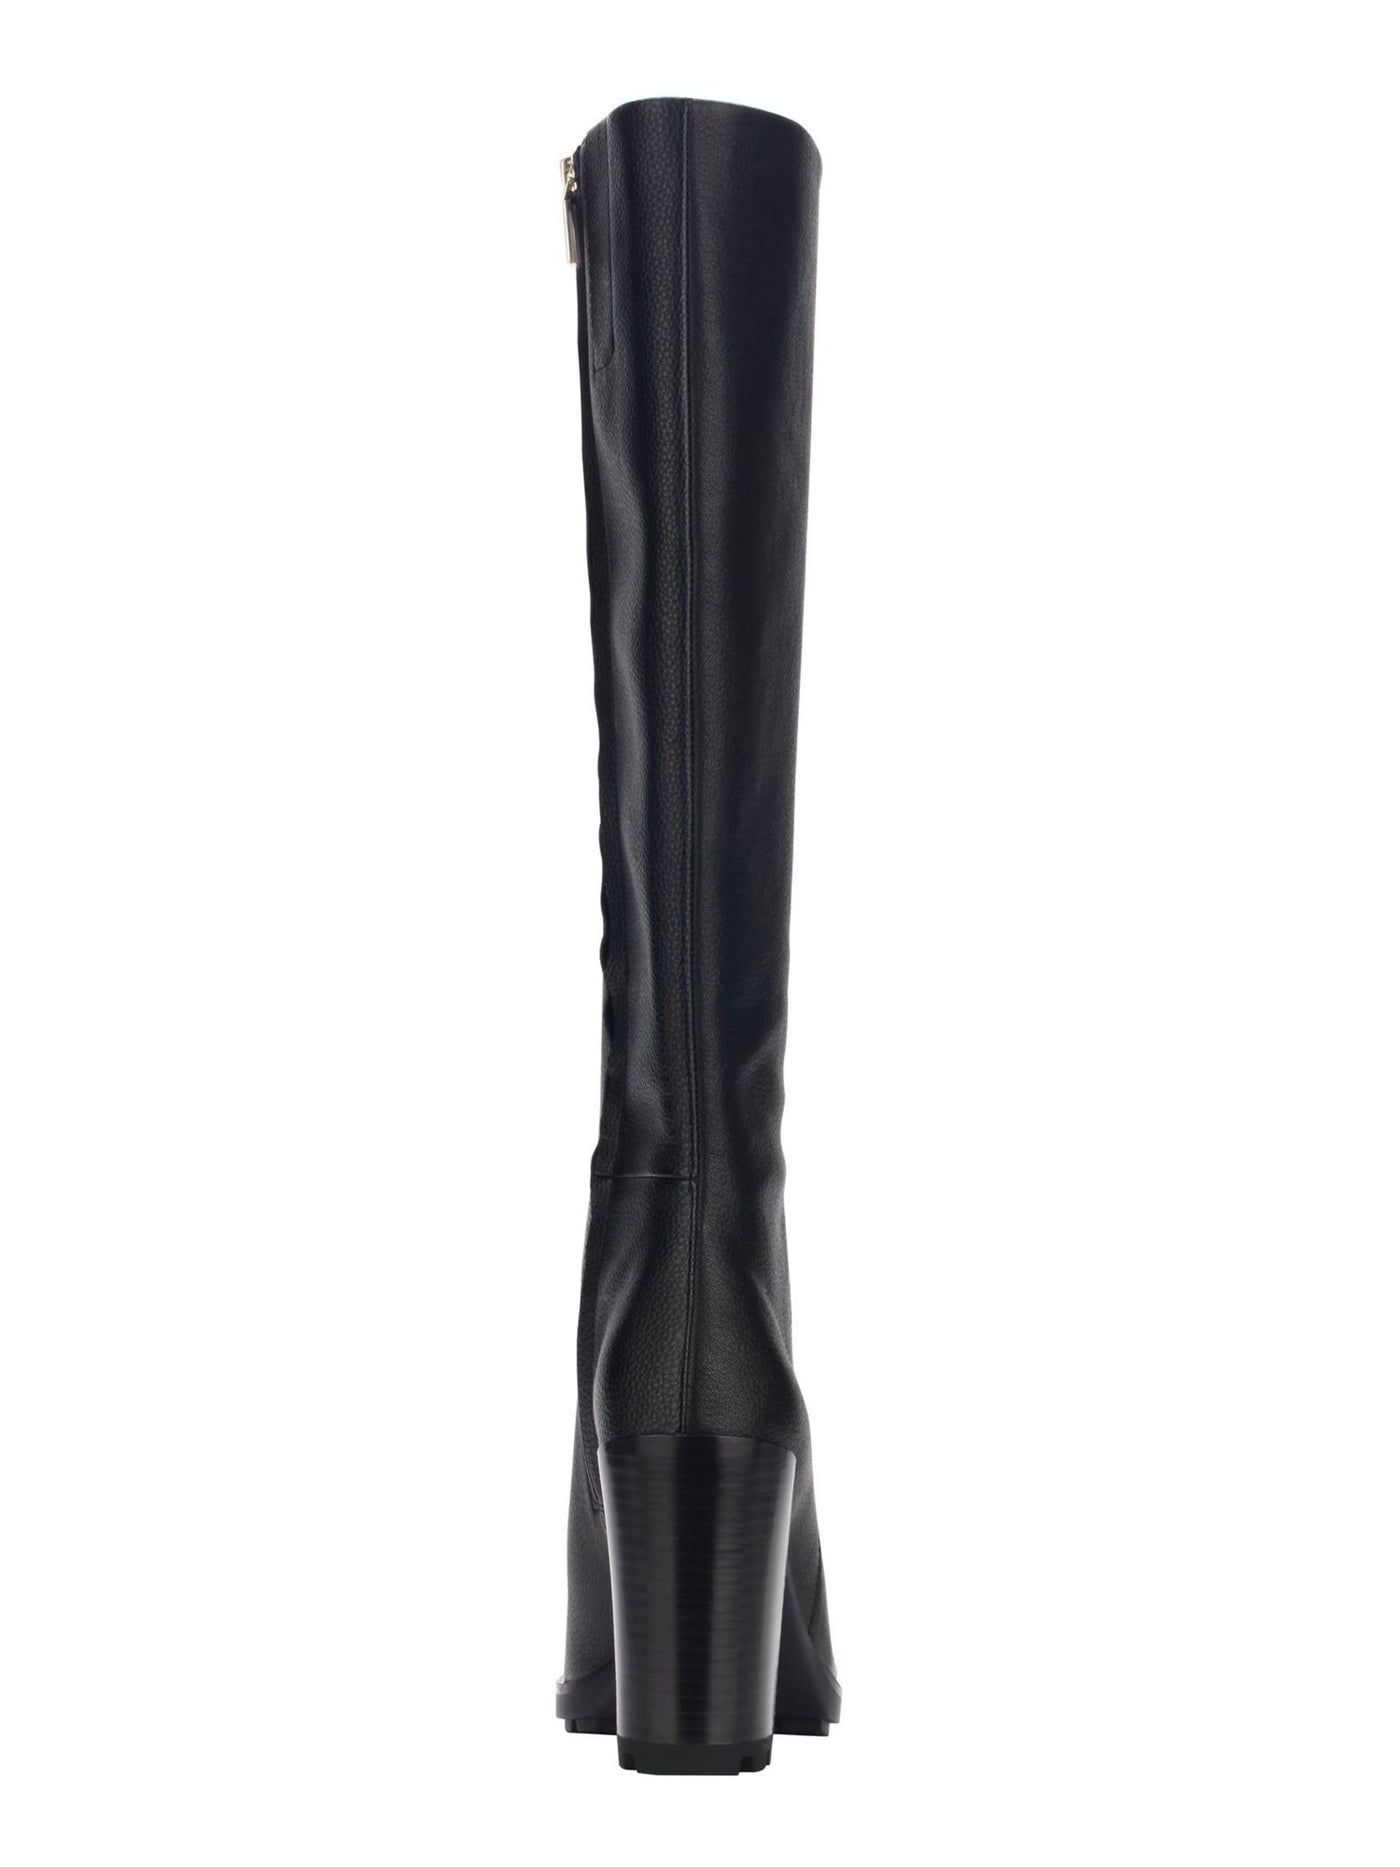 KENNETH COLE NEW YORK Womens Black Lug Sole Justin 2.0 Round Toe Block Heel Zip-Up Heeled Boots 7.5 M